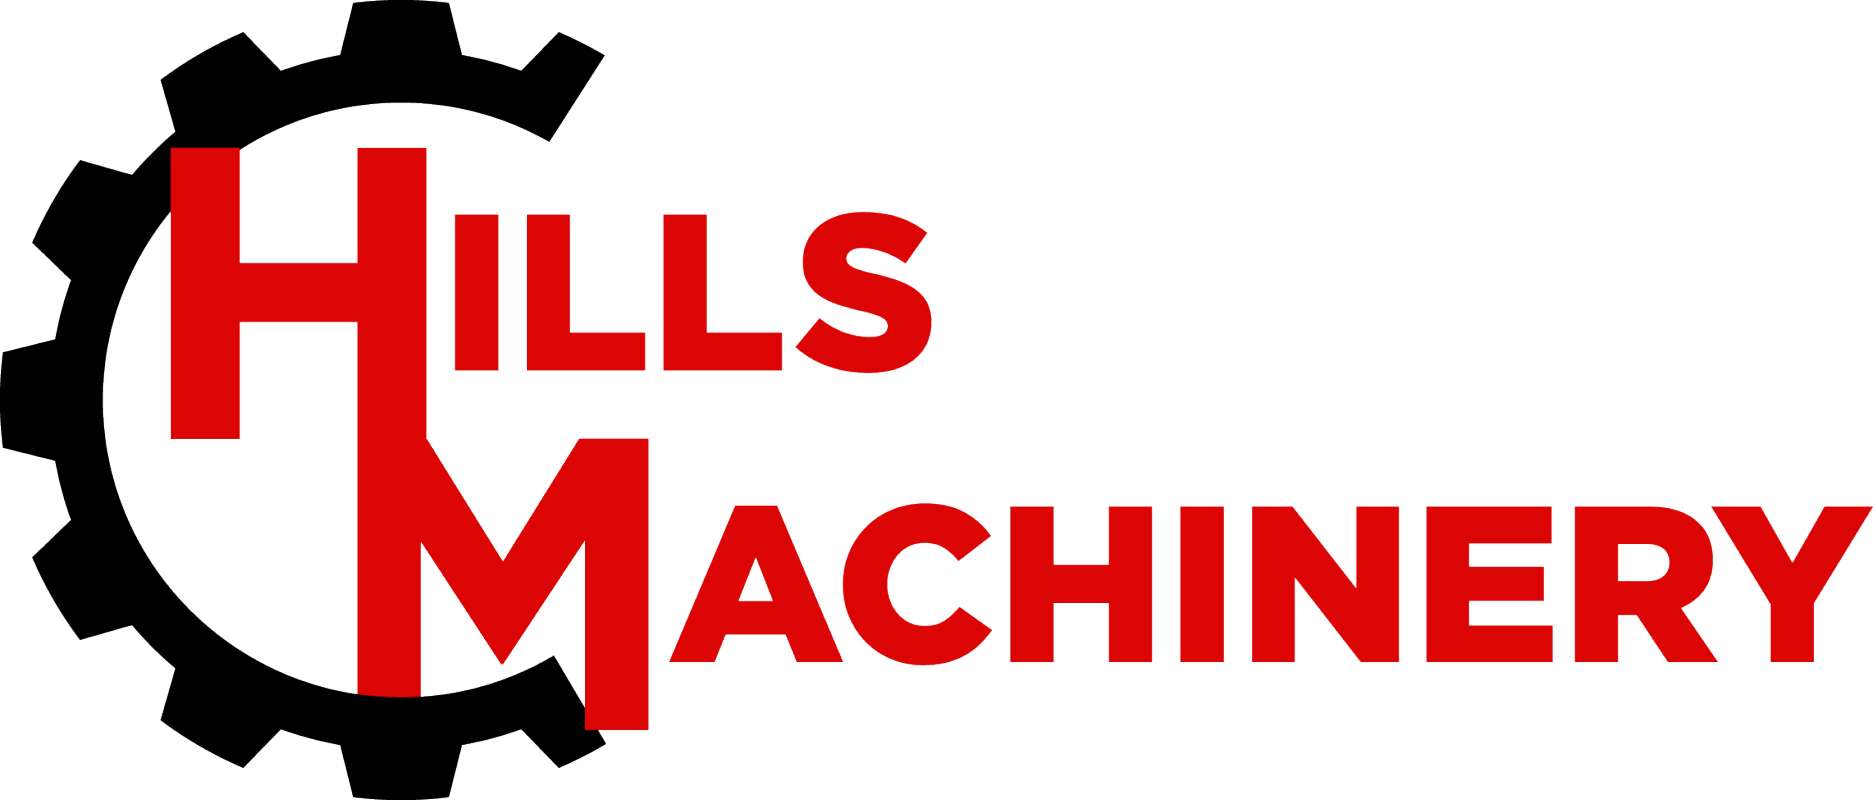 Machinery company. Machinery логотип. Партс Машинери логотип. ФКР Машинери лого. Zias Machinery лого.